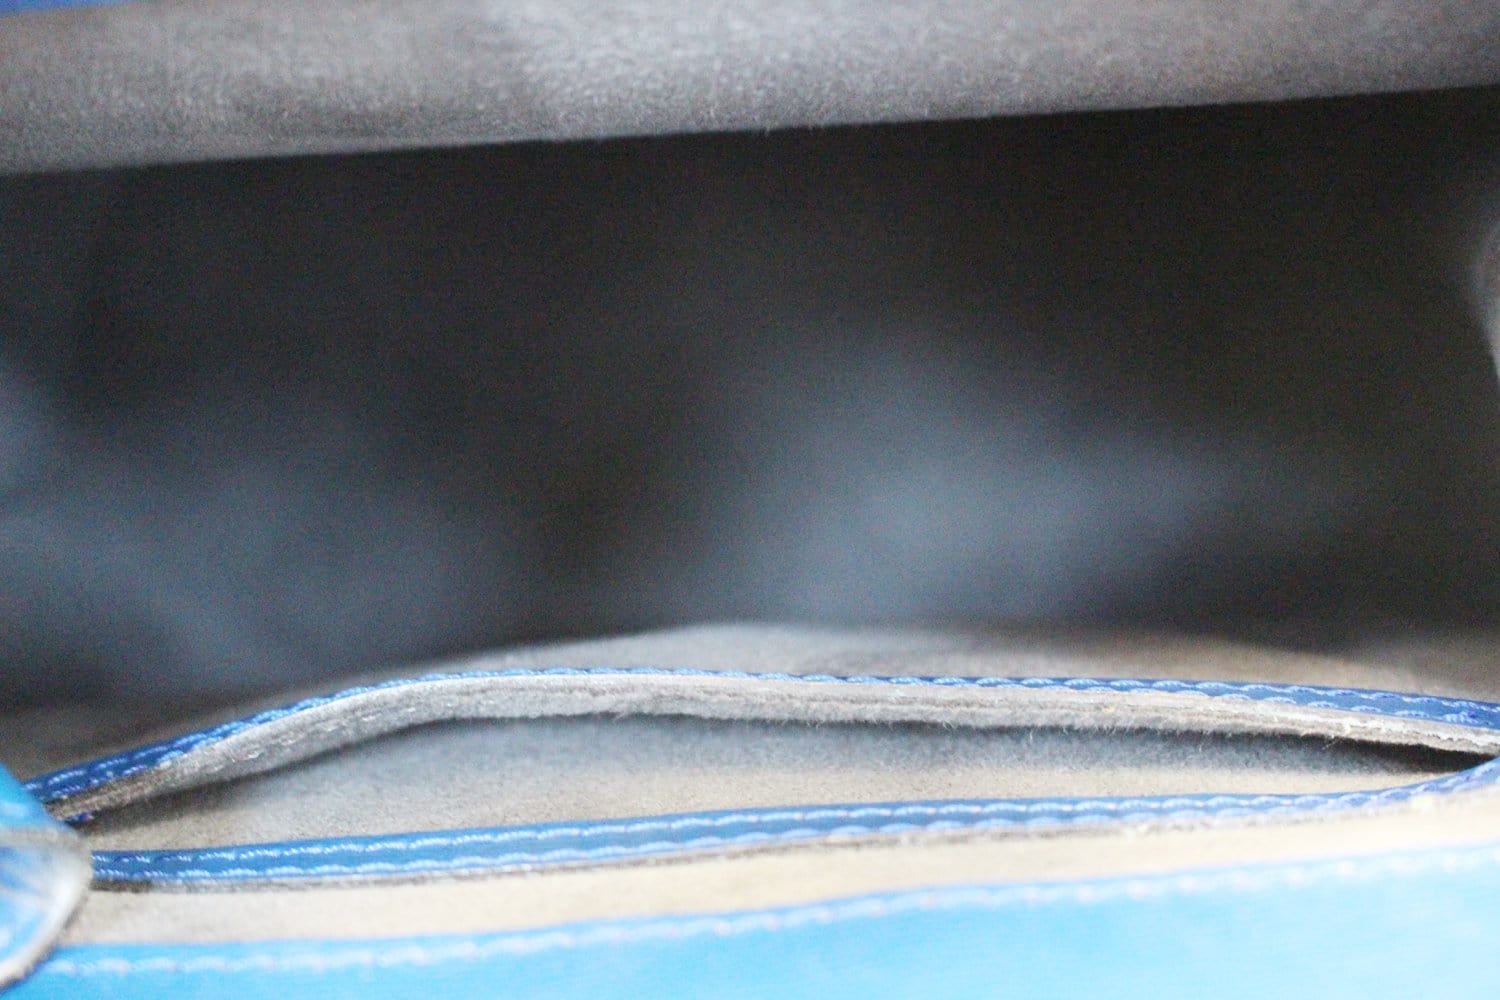 Louis Vuitton ​Cluny Epi Leather Shoulder Bag on SALE